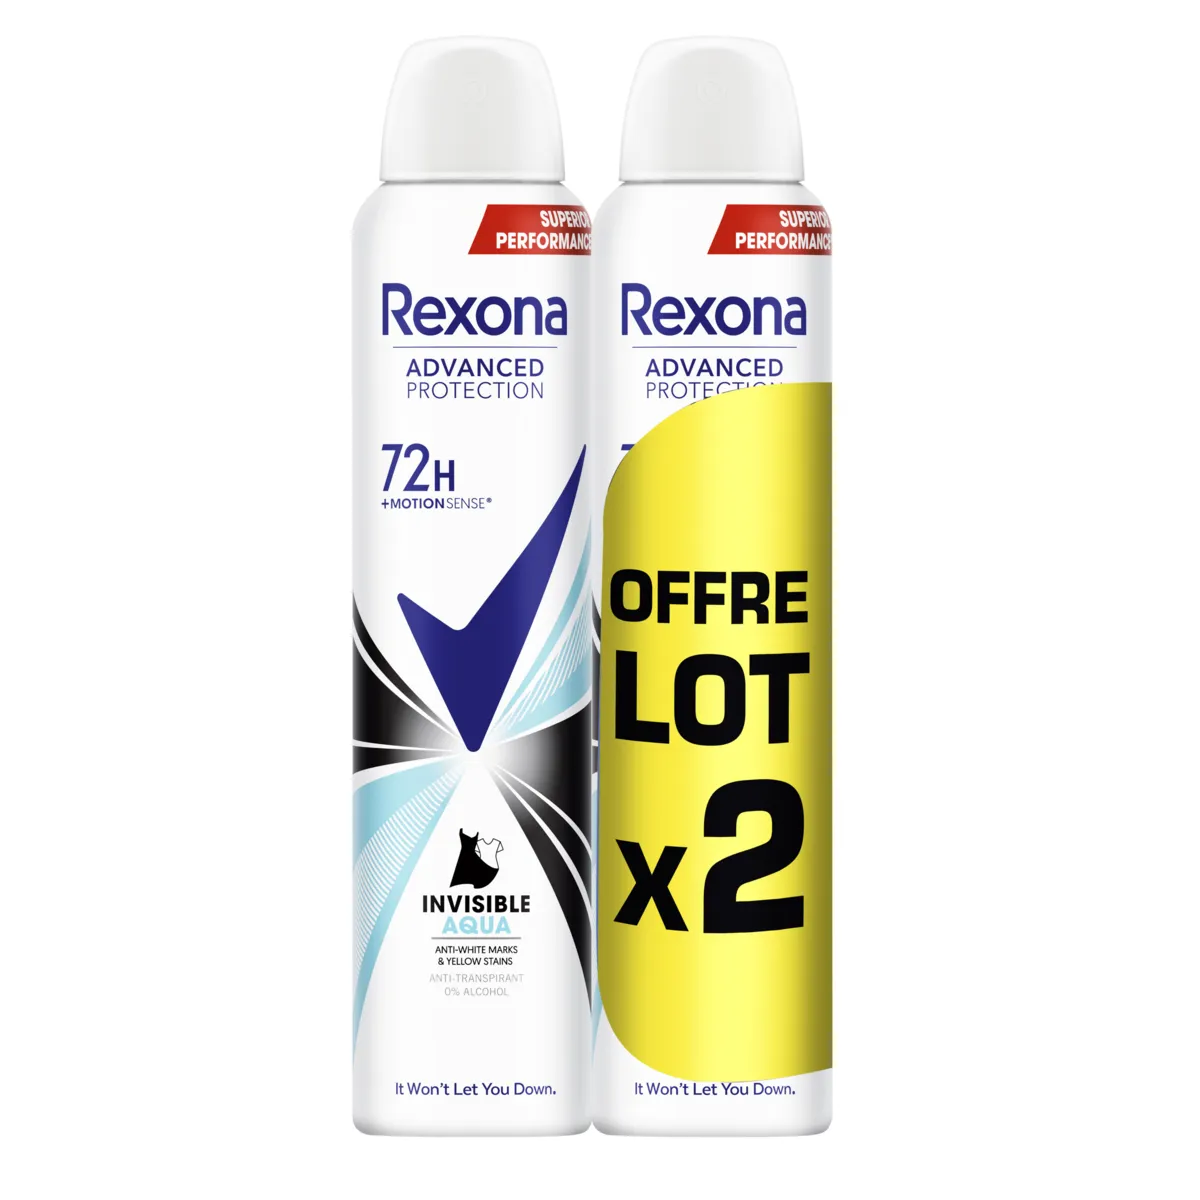 déodorant atomiseur rexona